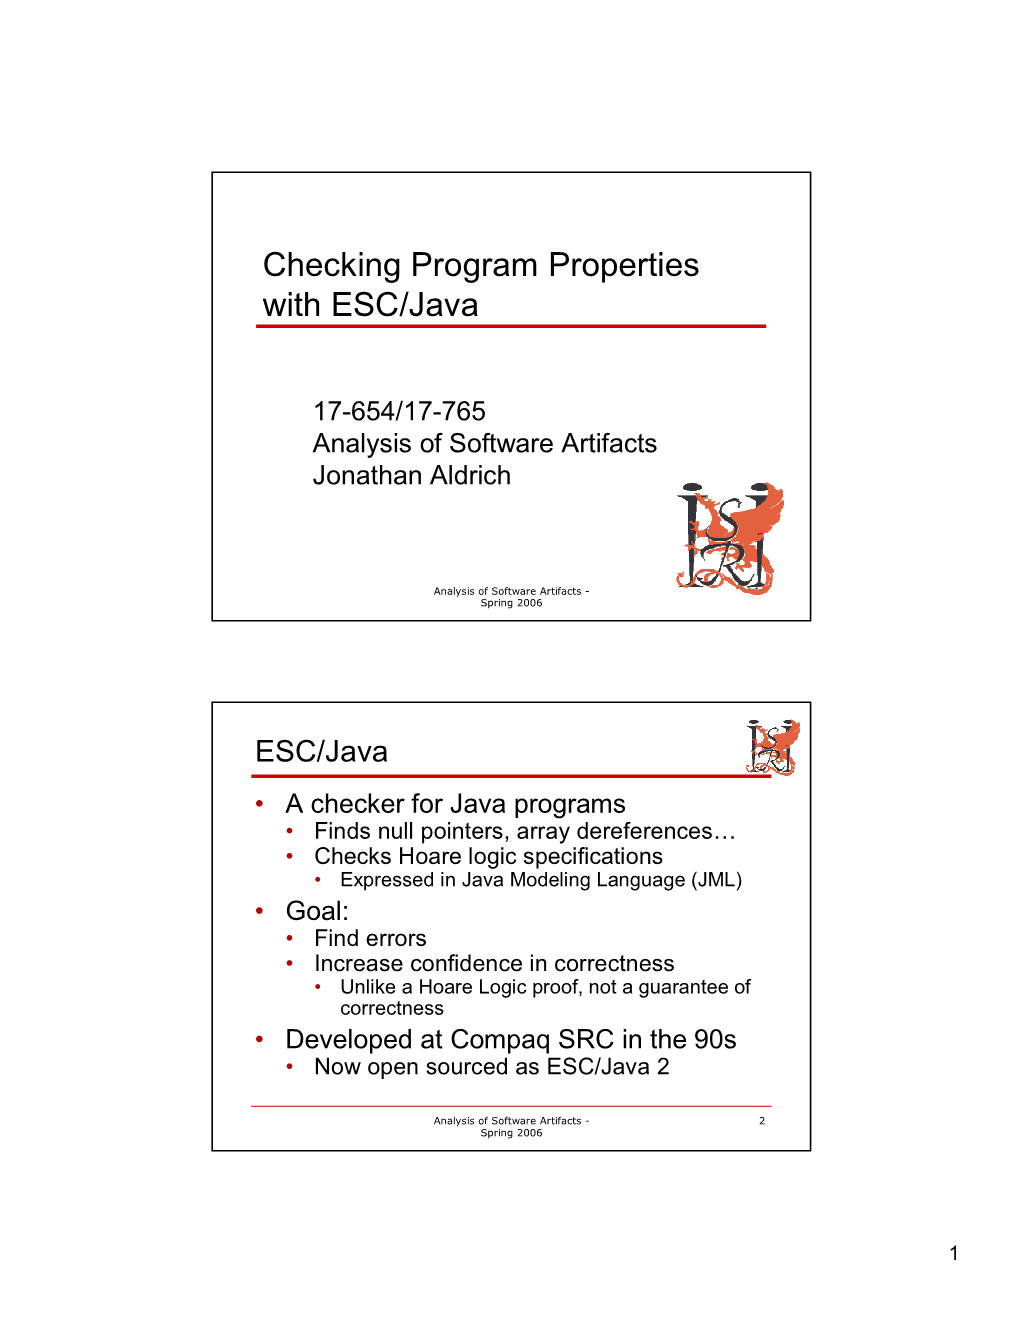 Checking Program Properties with ESC/Java